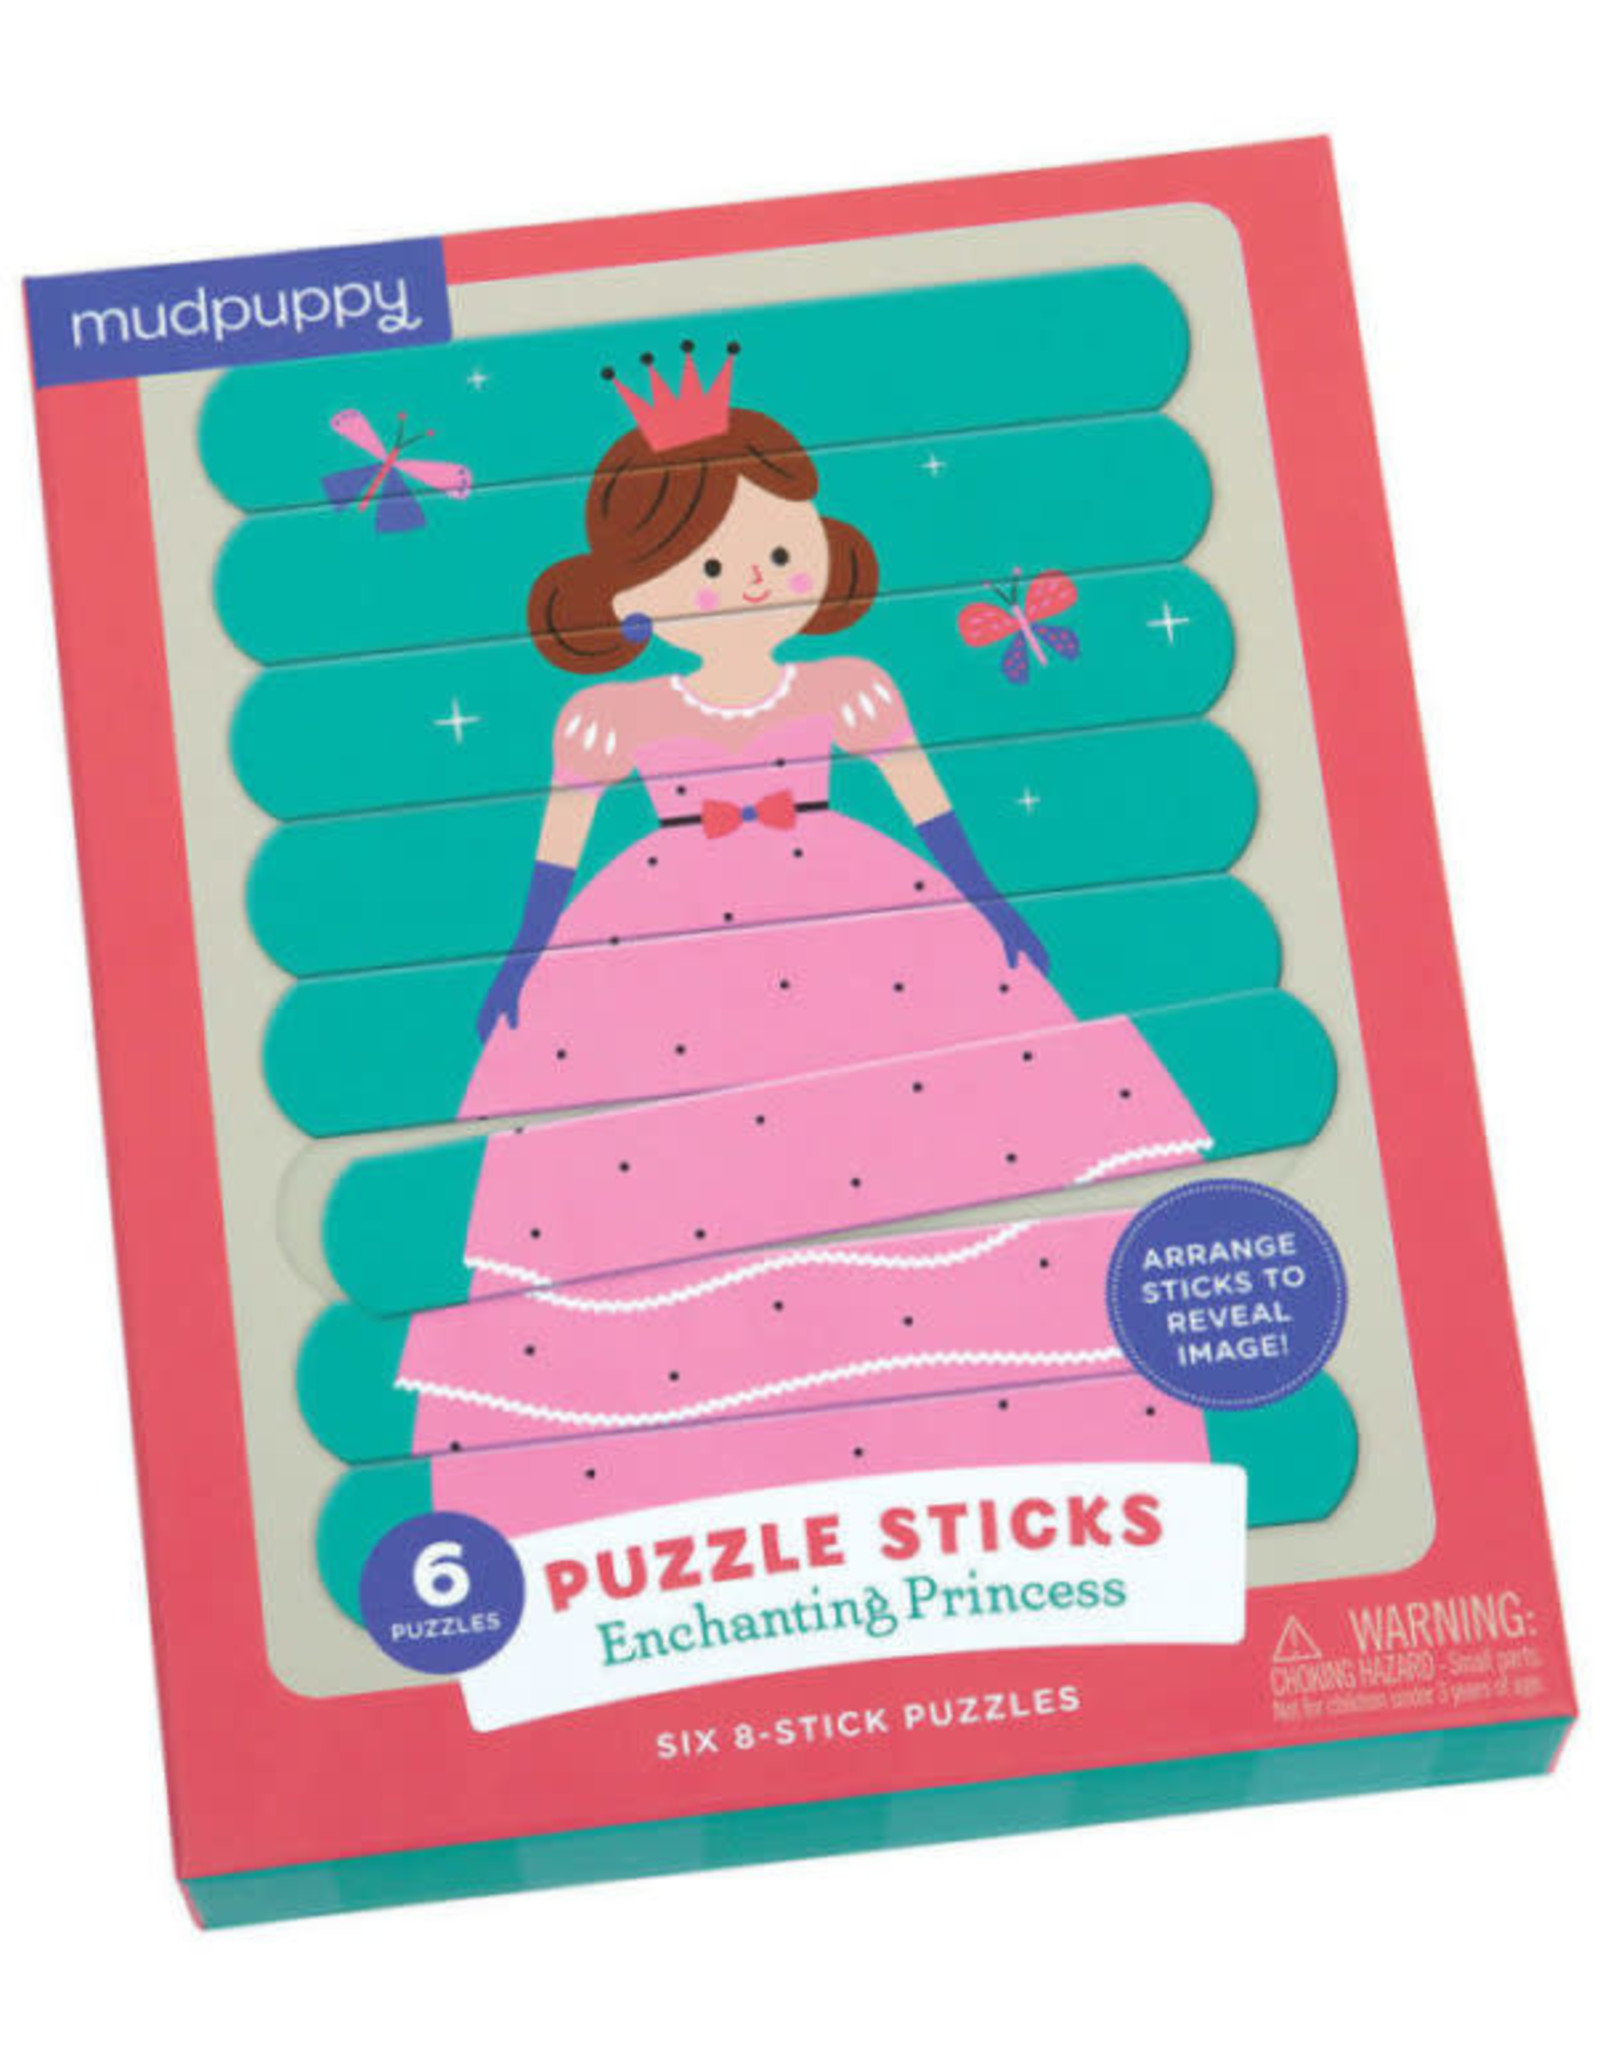 Mudpuppy Puzzle Sticks "Enchanting Princess"